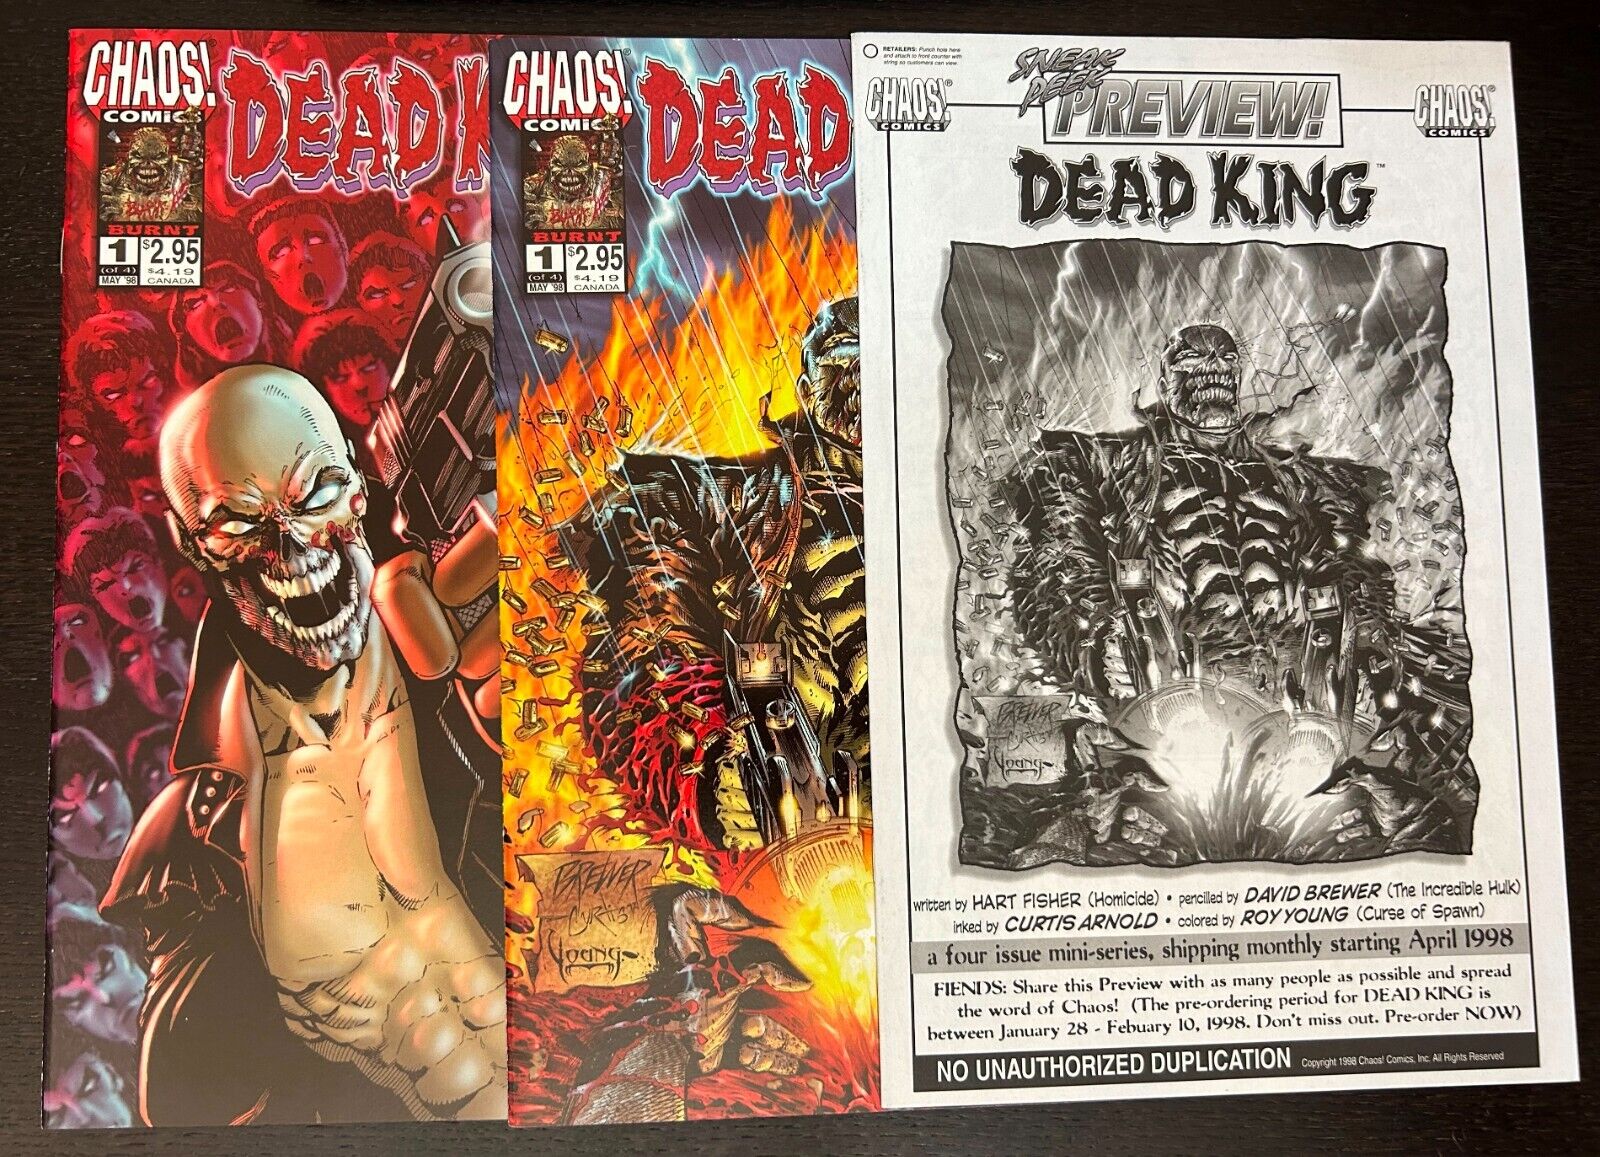 DEAD KING #1 (Chaos Comics 1998) -- 1st Print + Variant + RETAILER PREVIEW Set